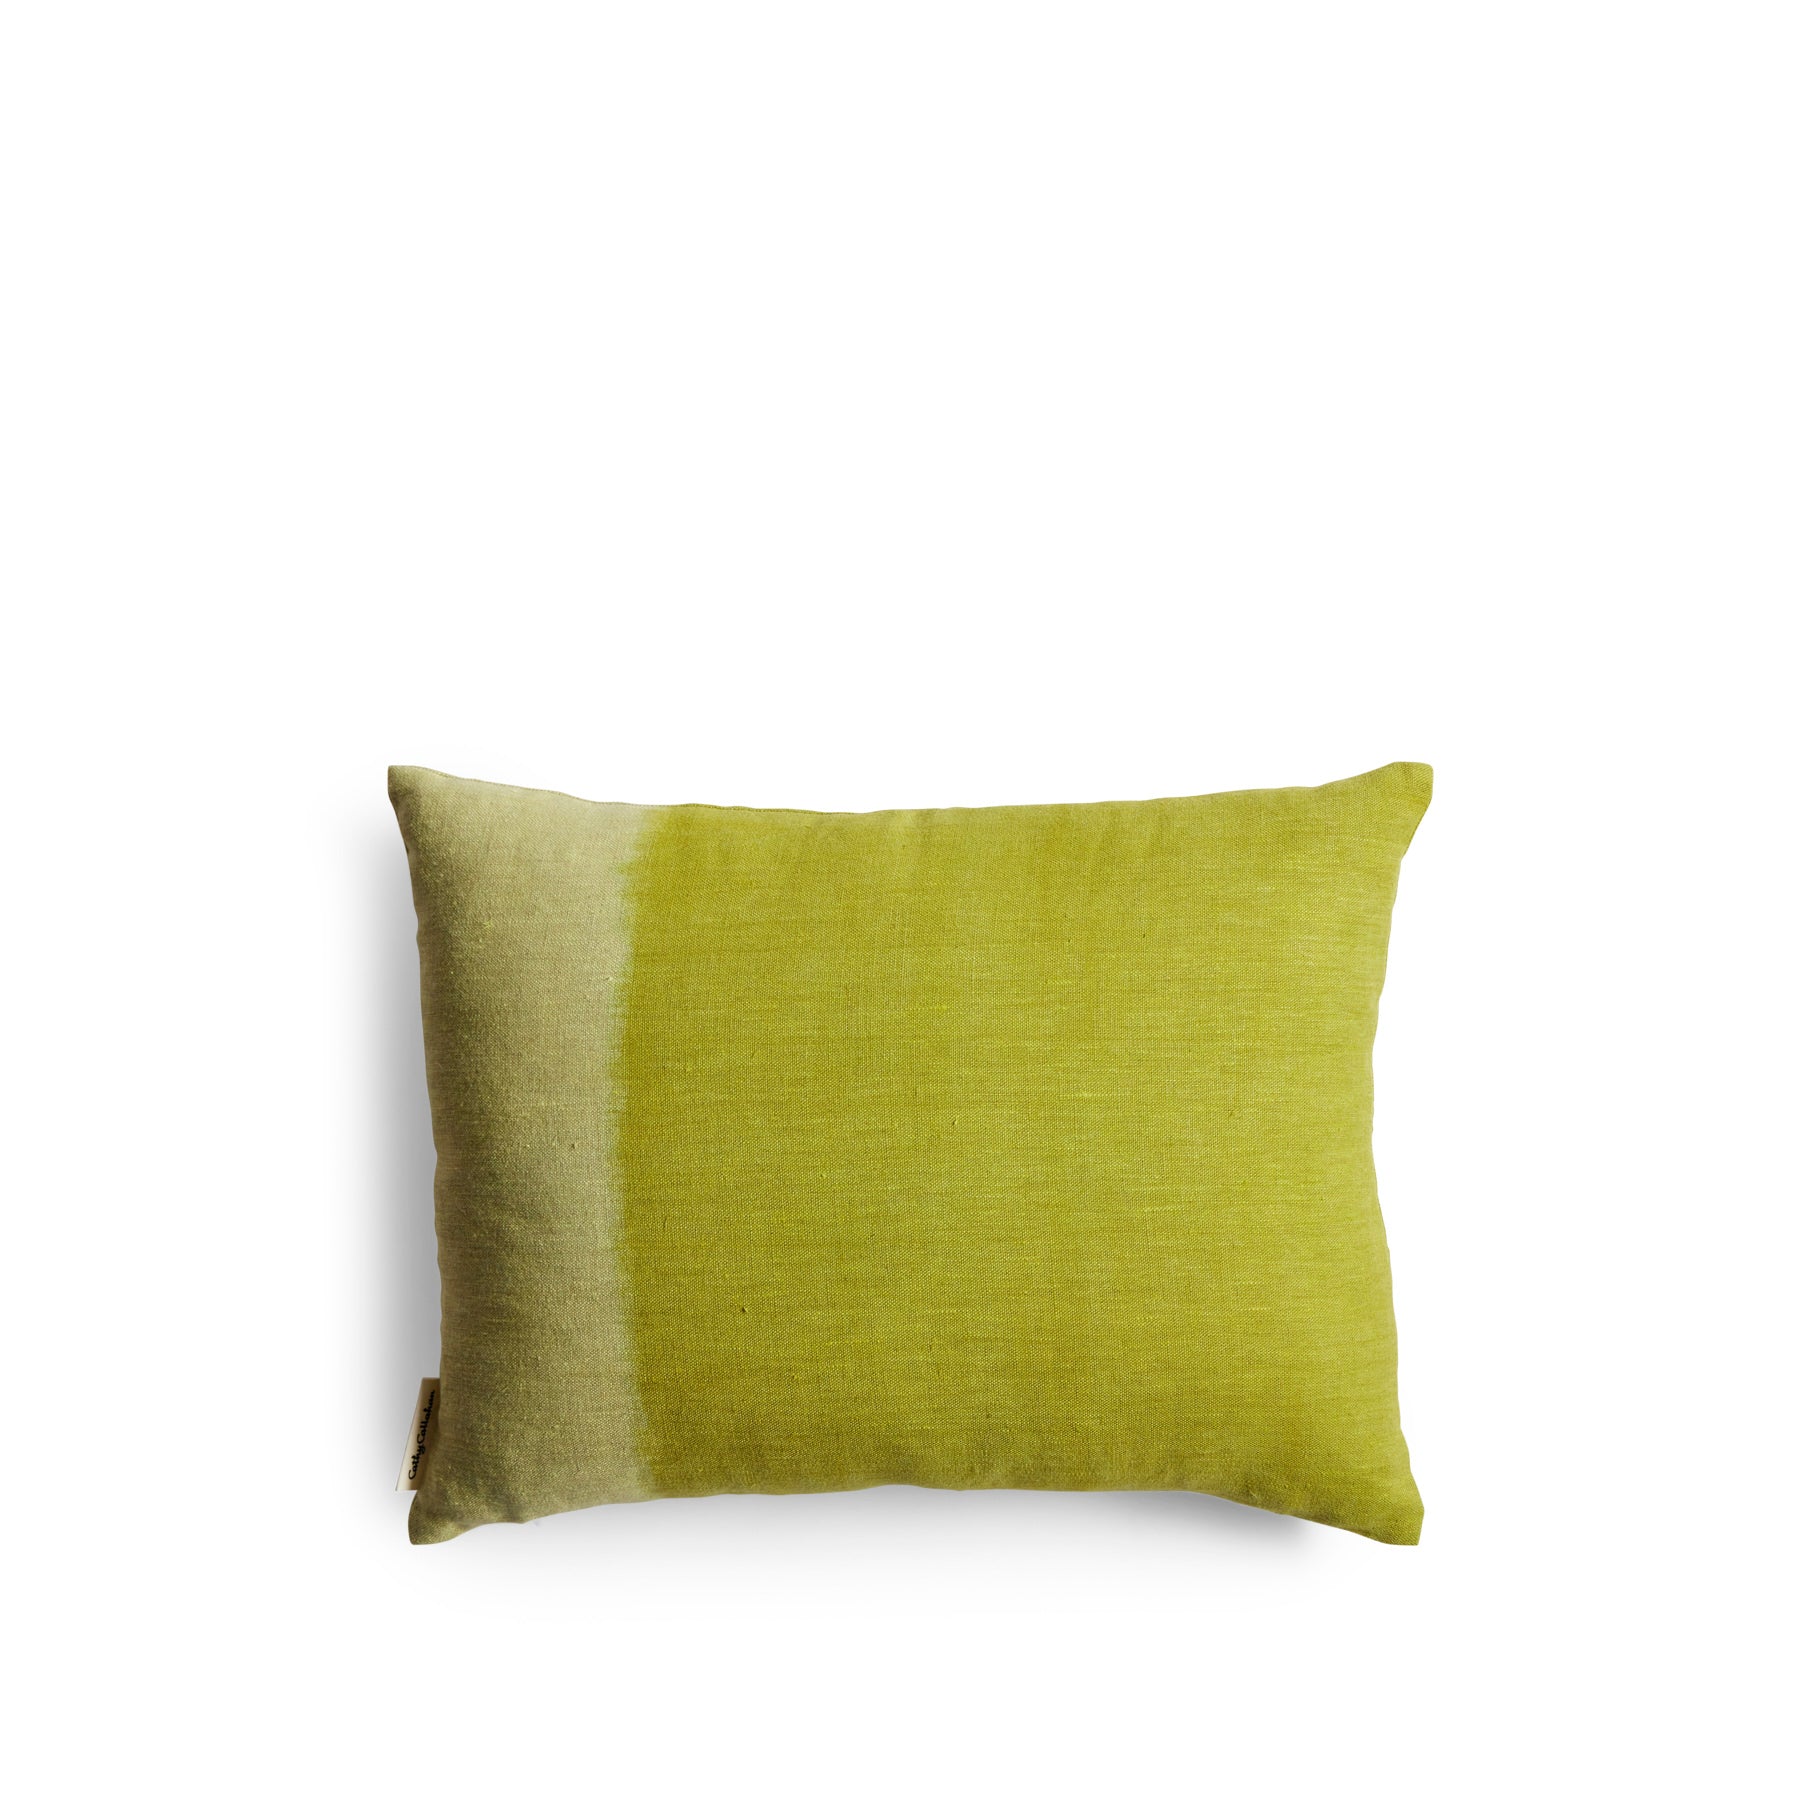 Pillow in Avocado/Lemon Rind Zoom Image 1